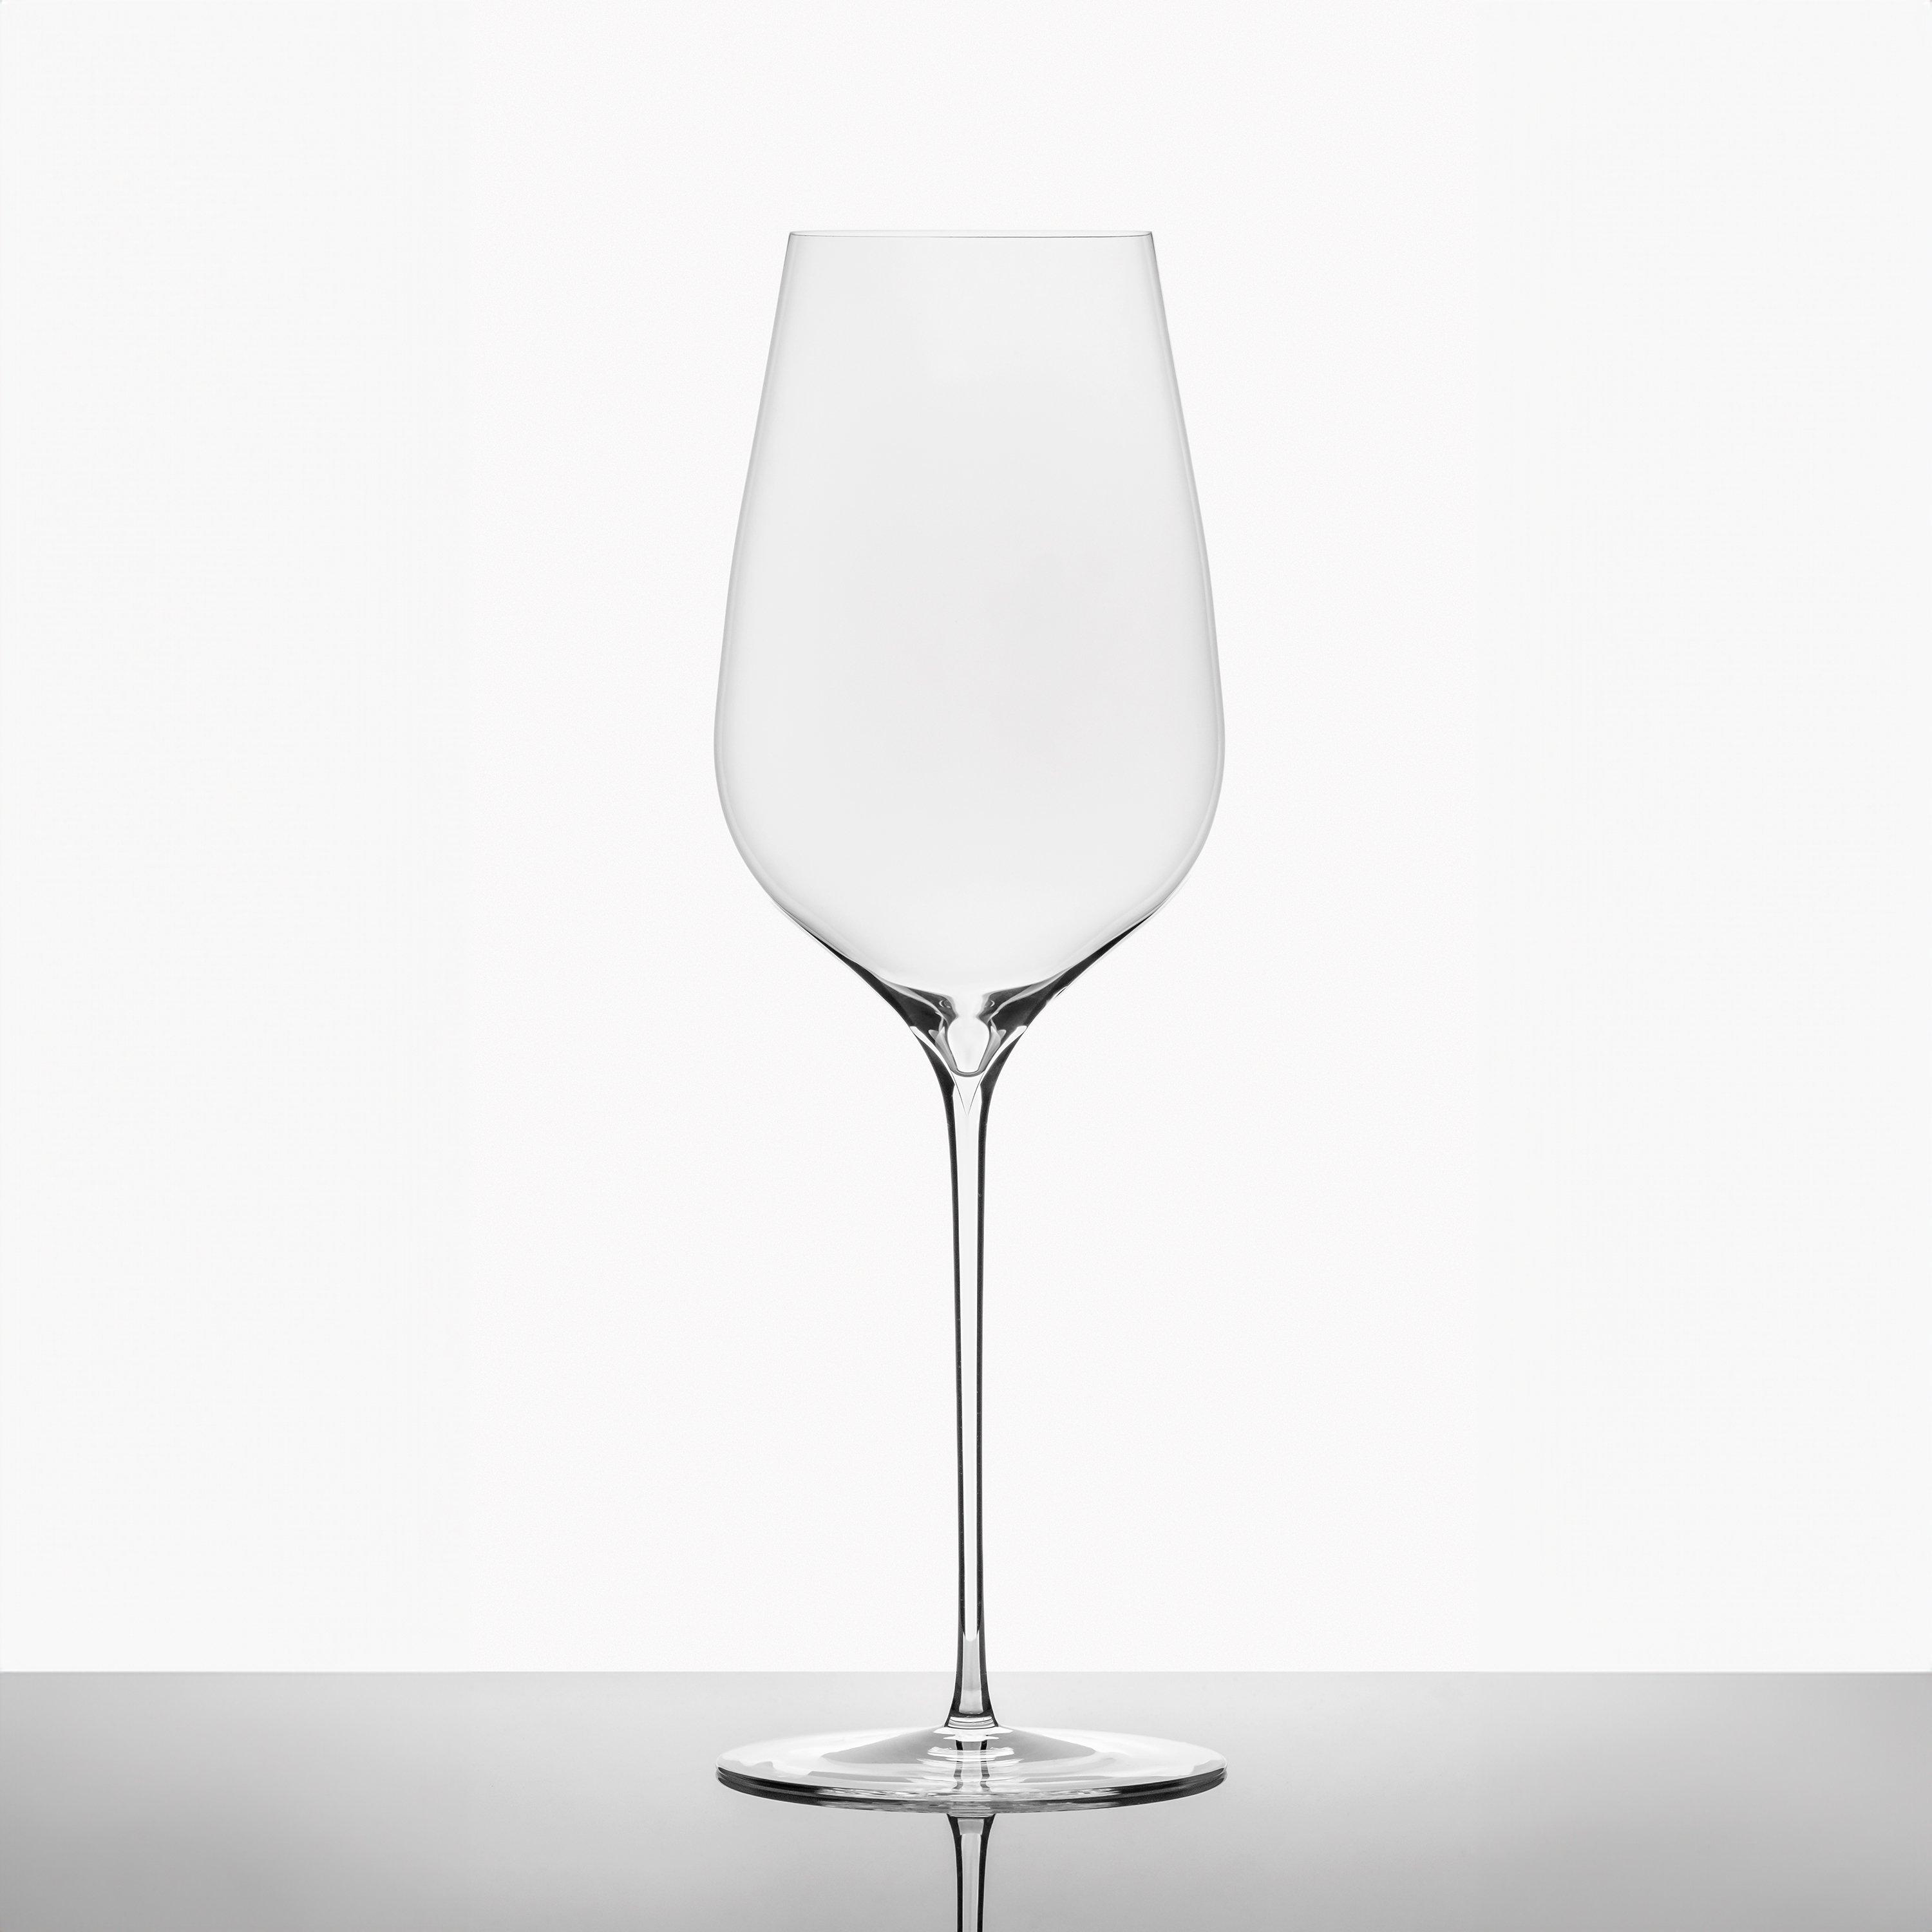 Luna & Mantha 9 1/2 Wine Glasses - 2